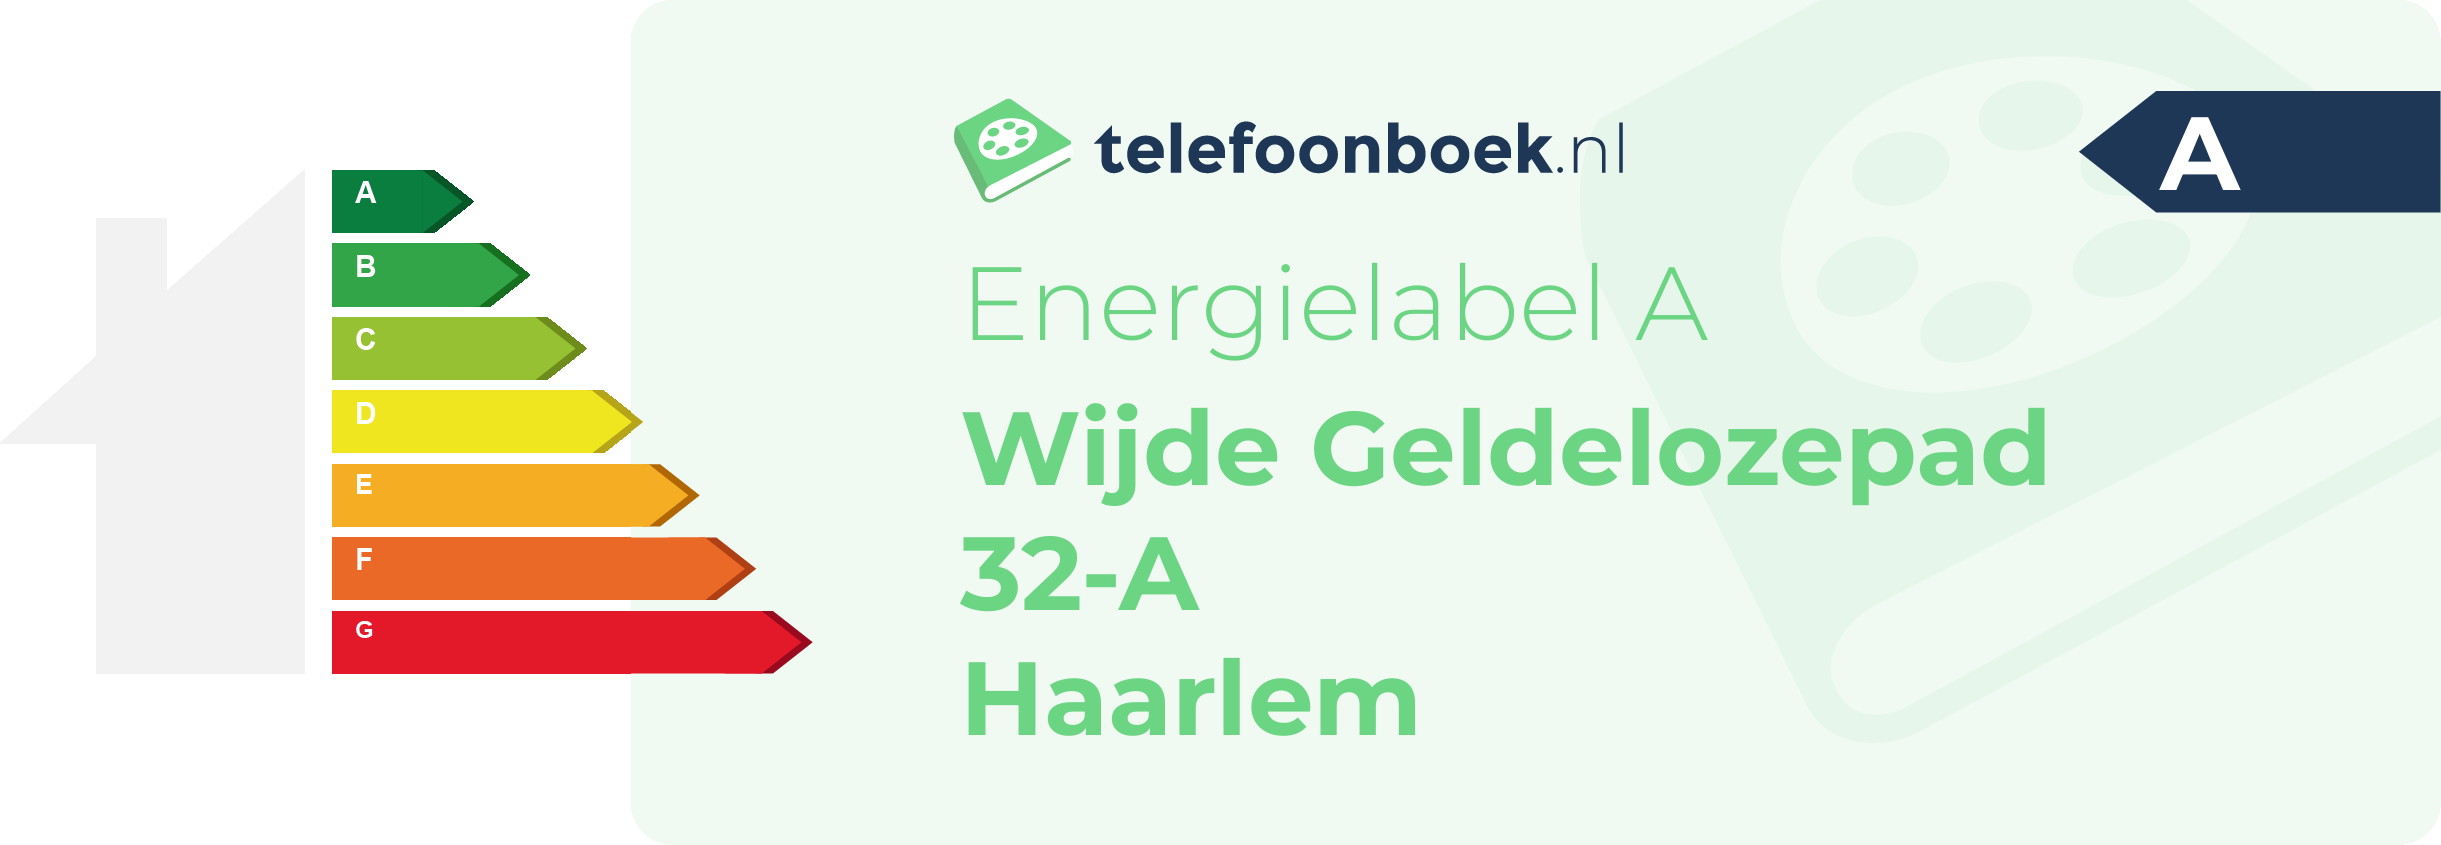 Energielabel Wijde Geldelozepad 32-A Haarlem